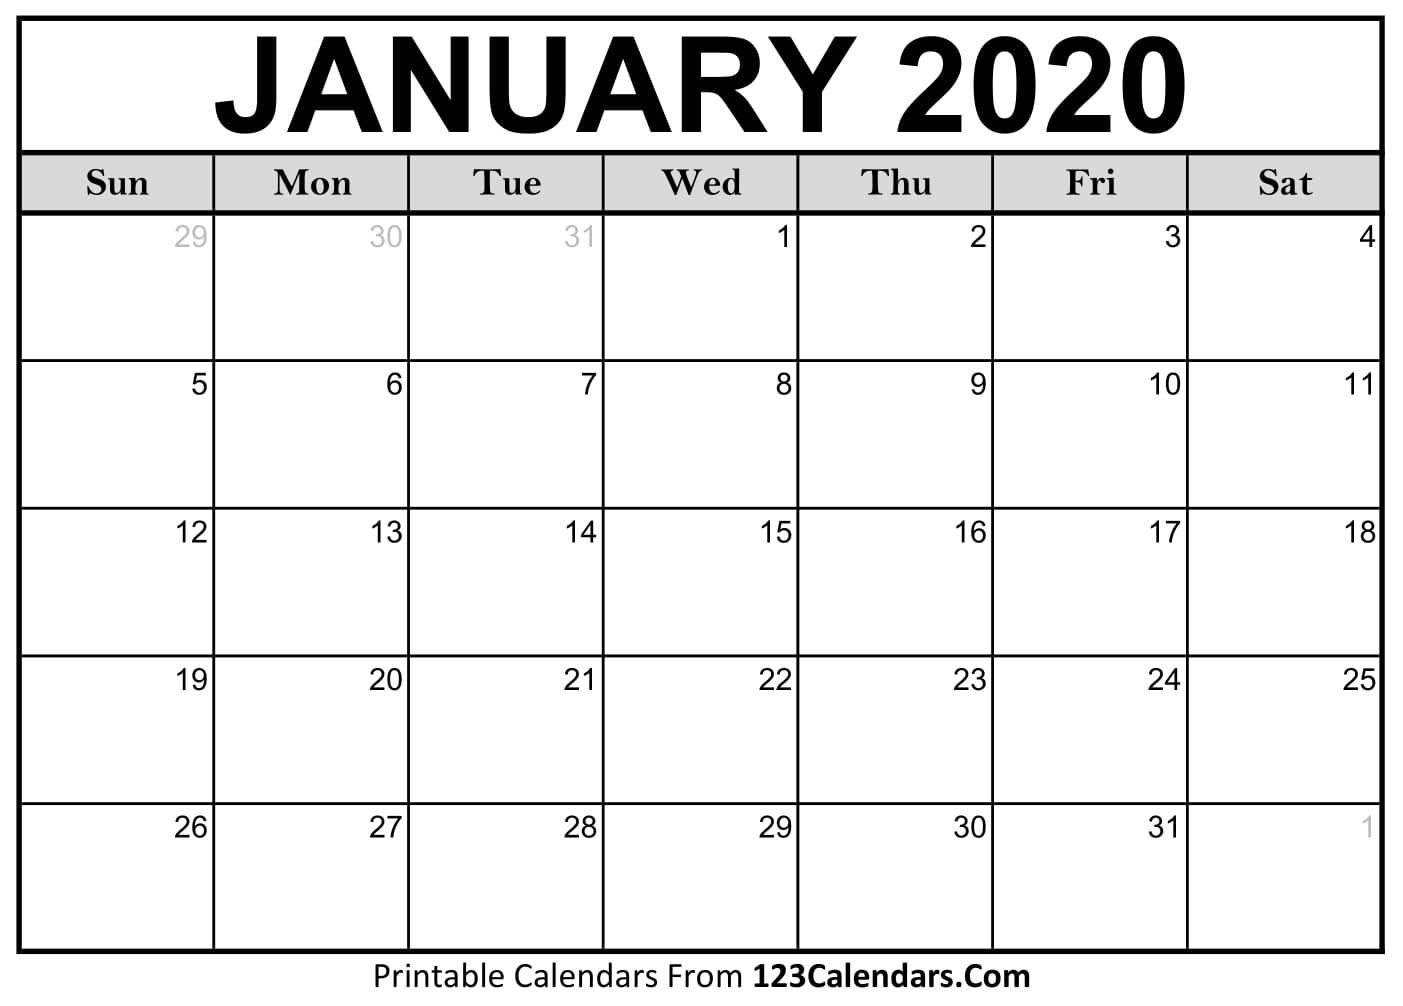 Free Printable Calendar | 123Calendars Perky January 2020 Calendar Printable Free